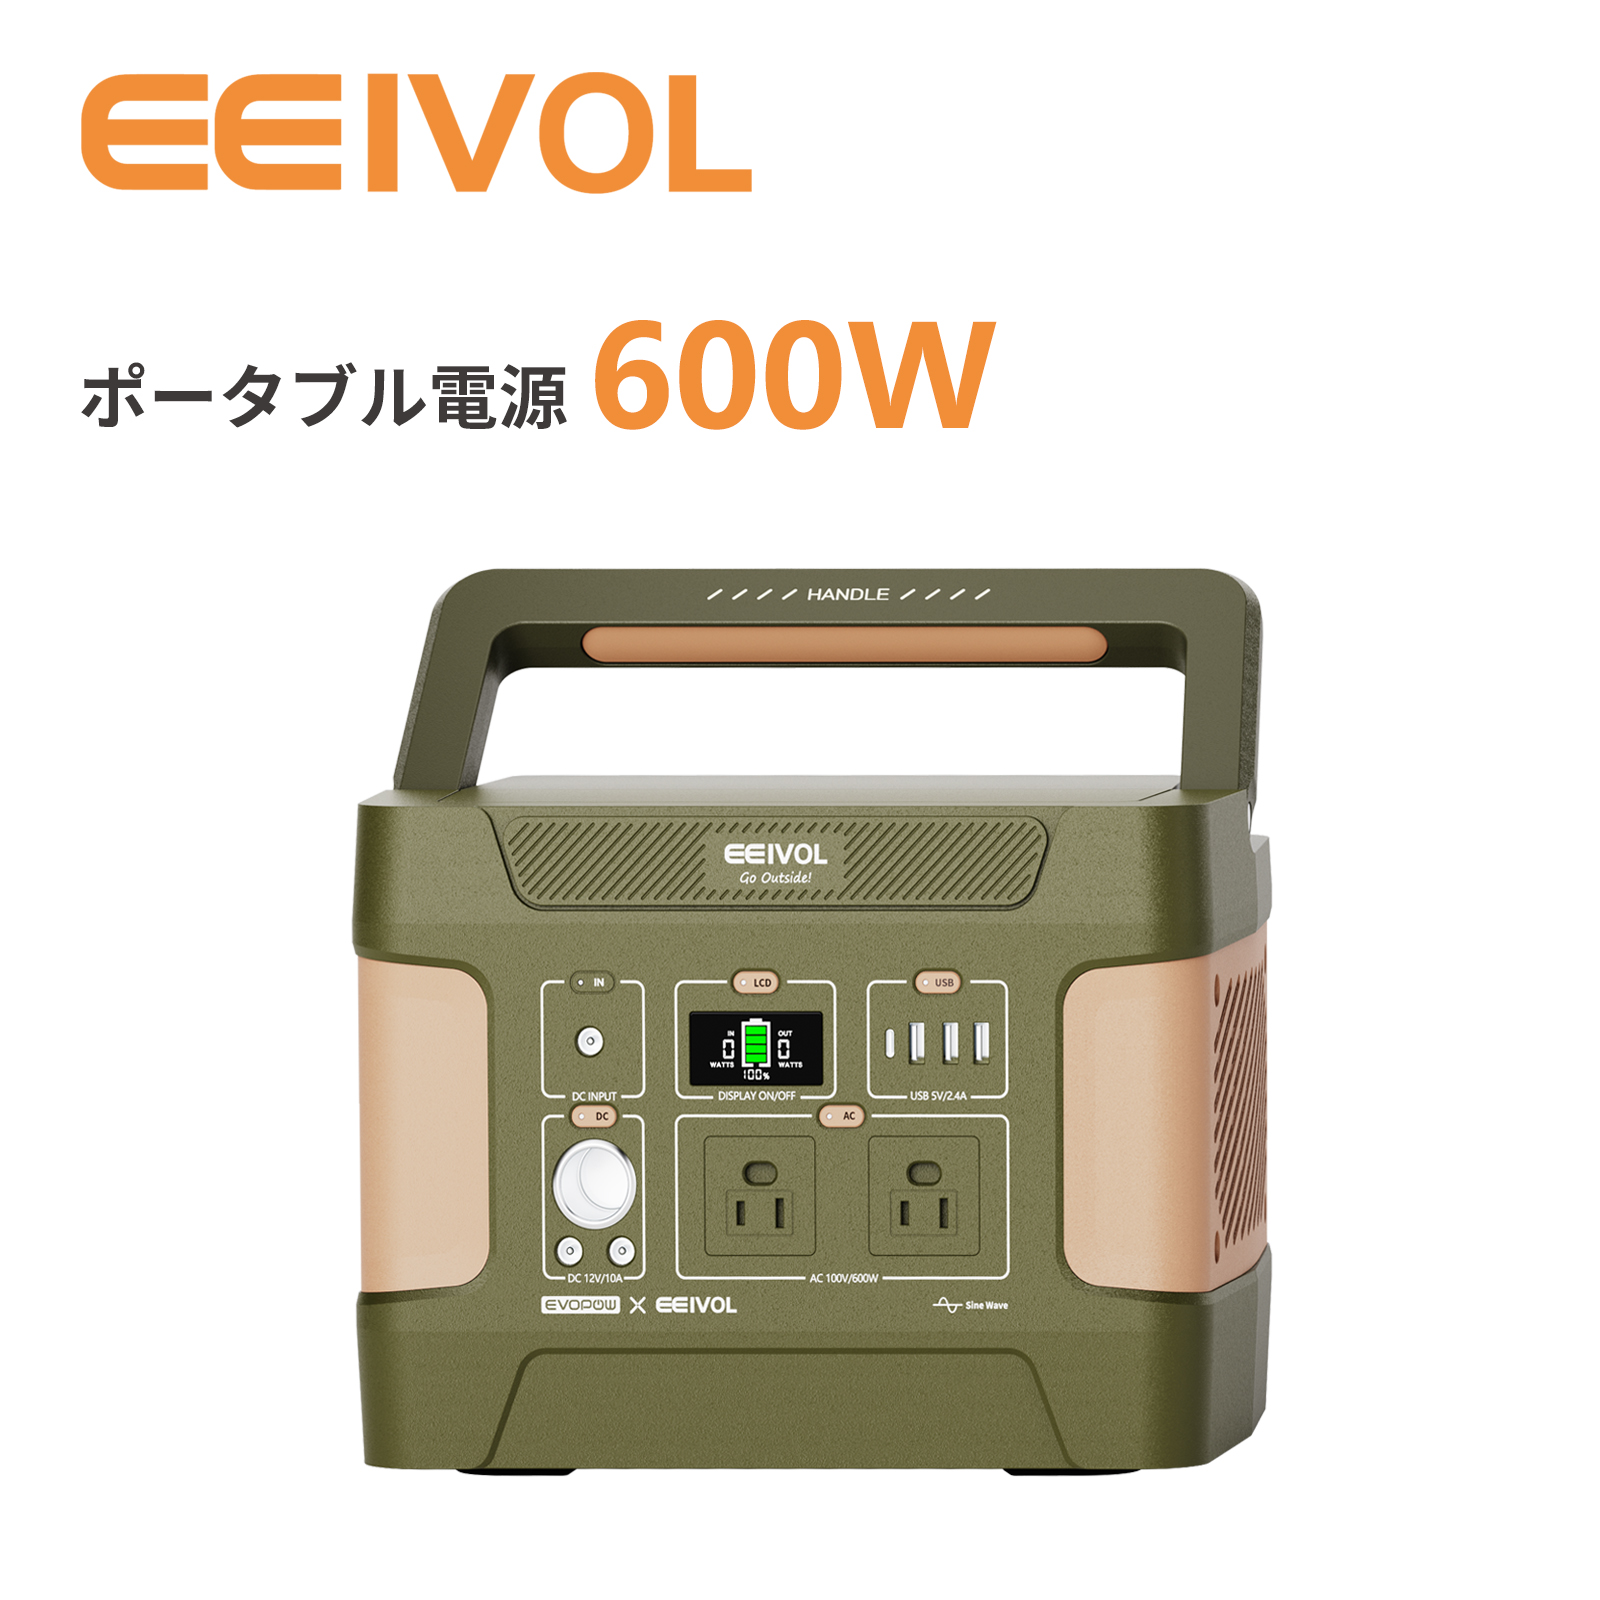 EEIVOL ポータブル電源 280Wh大容量 家庭用 蓄電池 発電機 - 生活雑貨